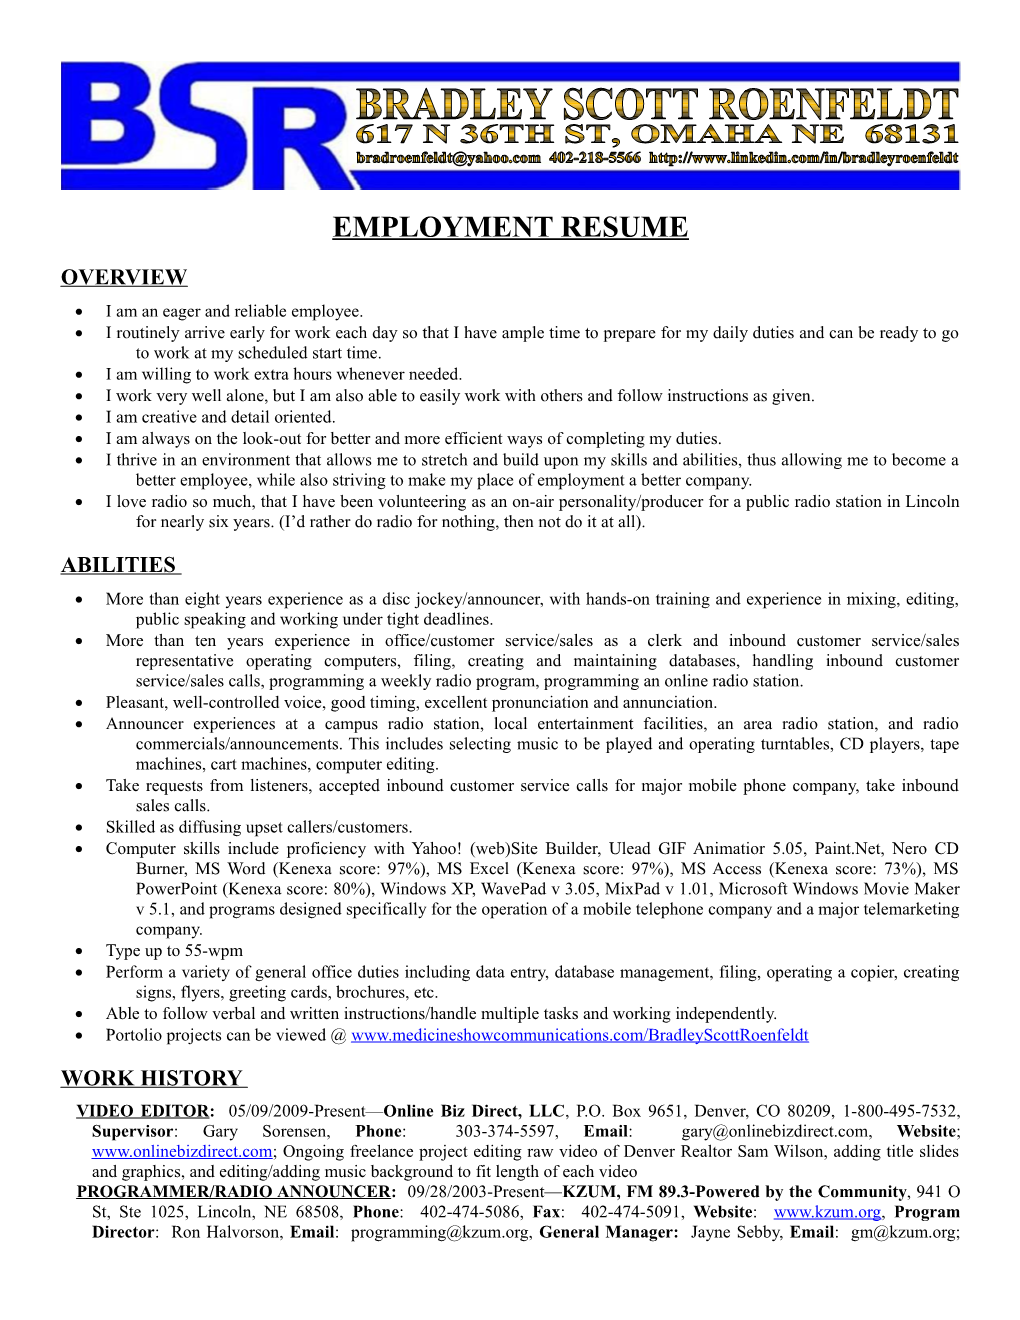 Employment Resume